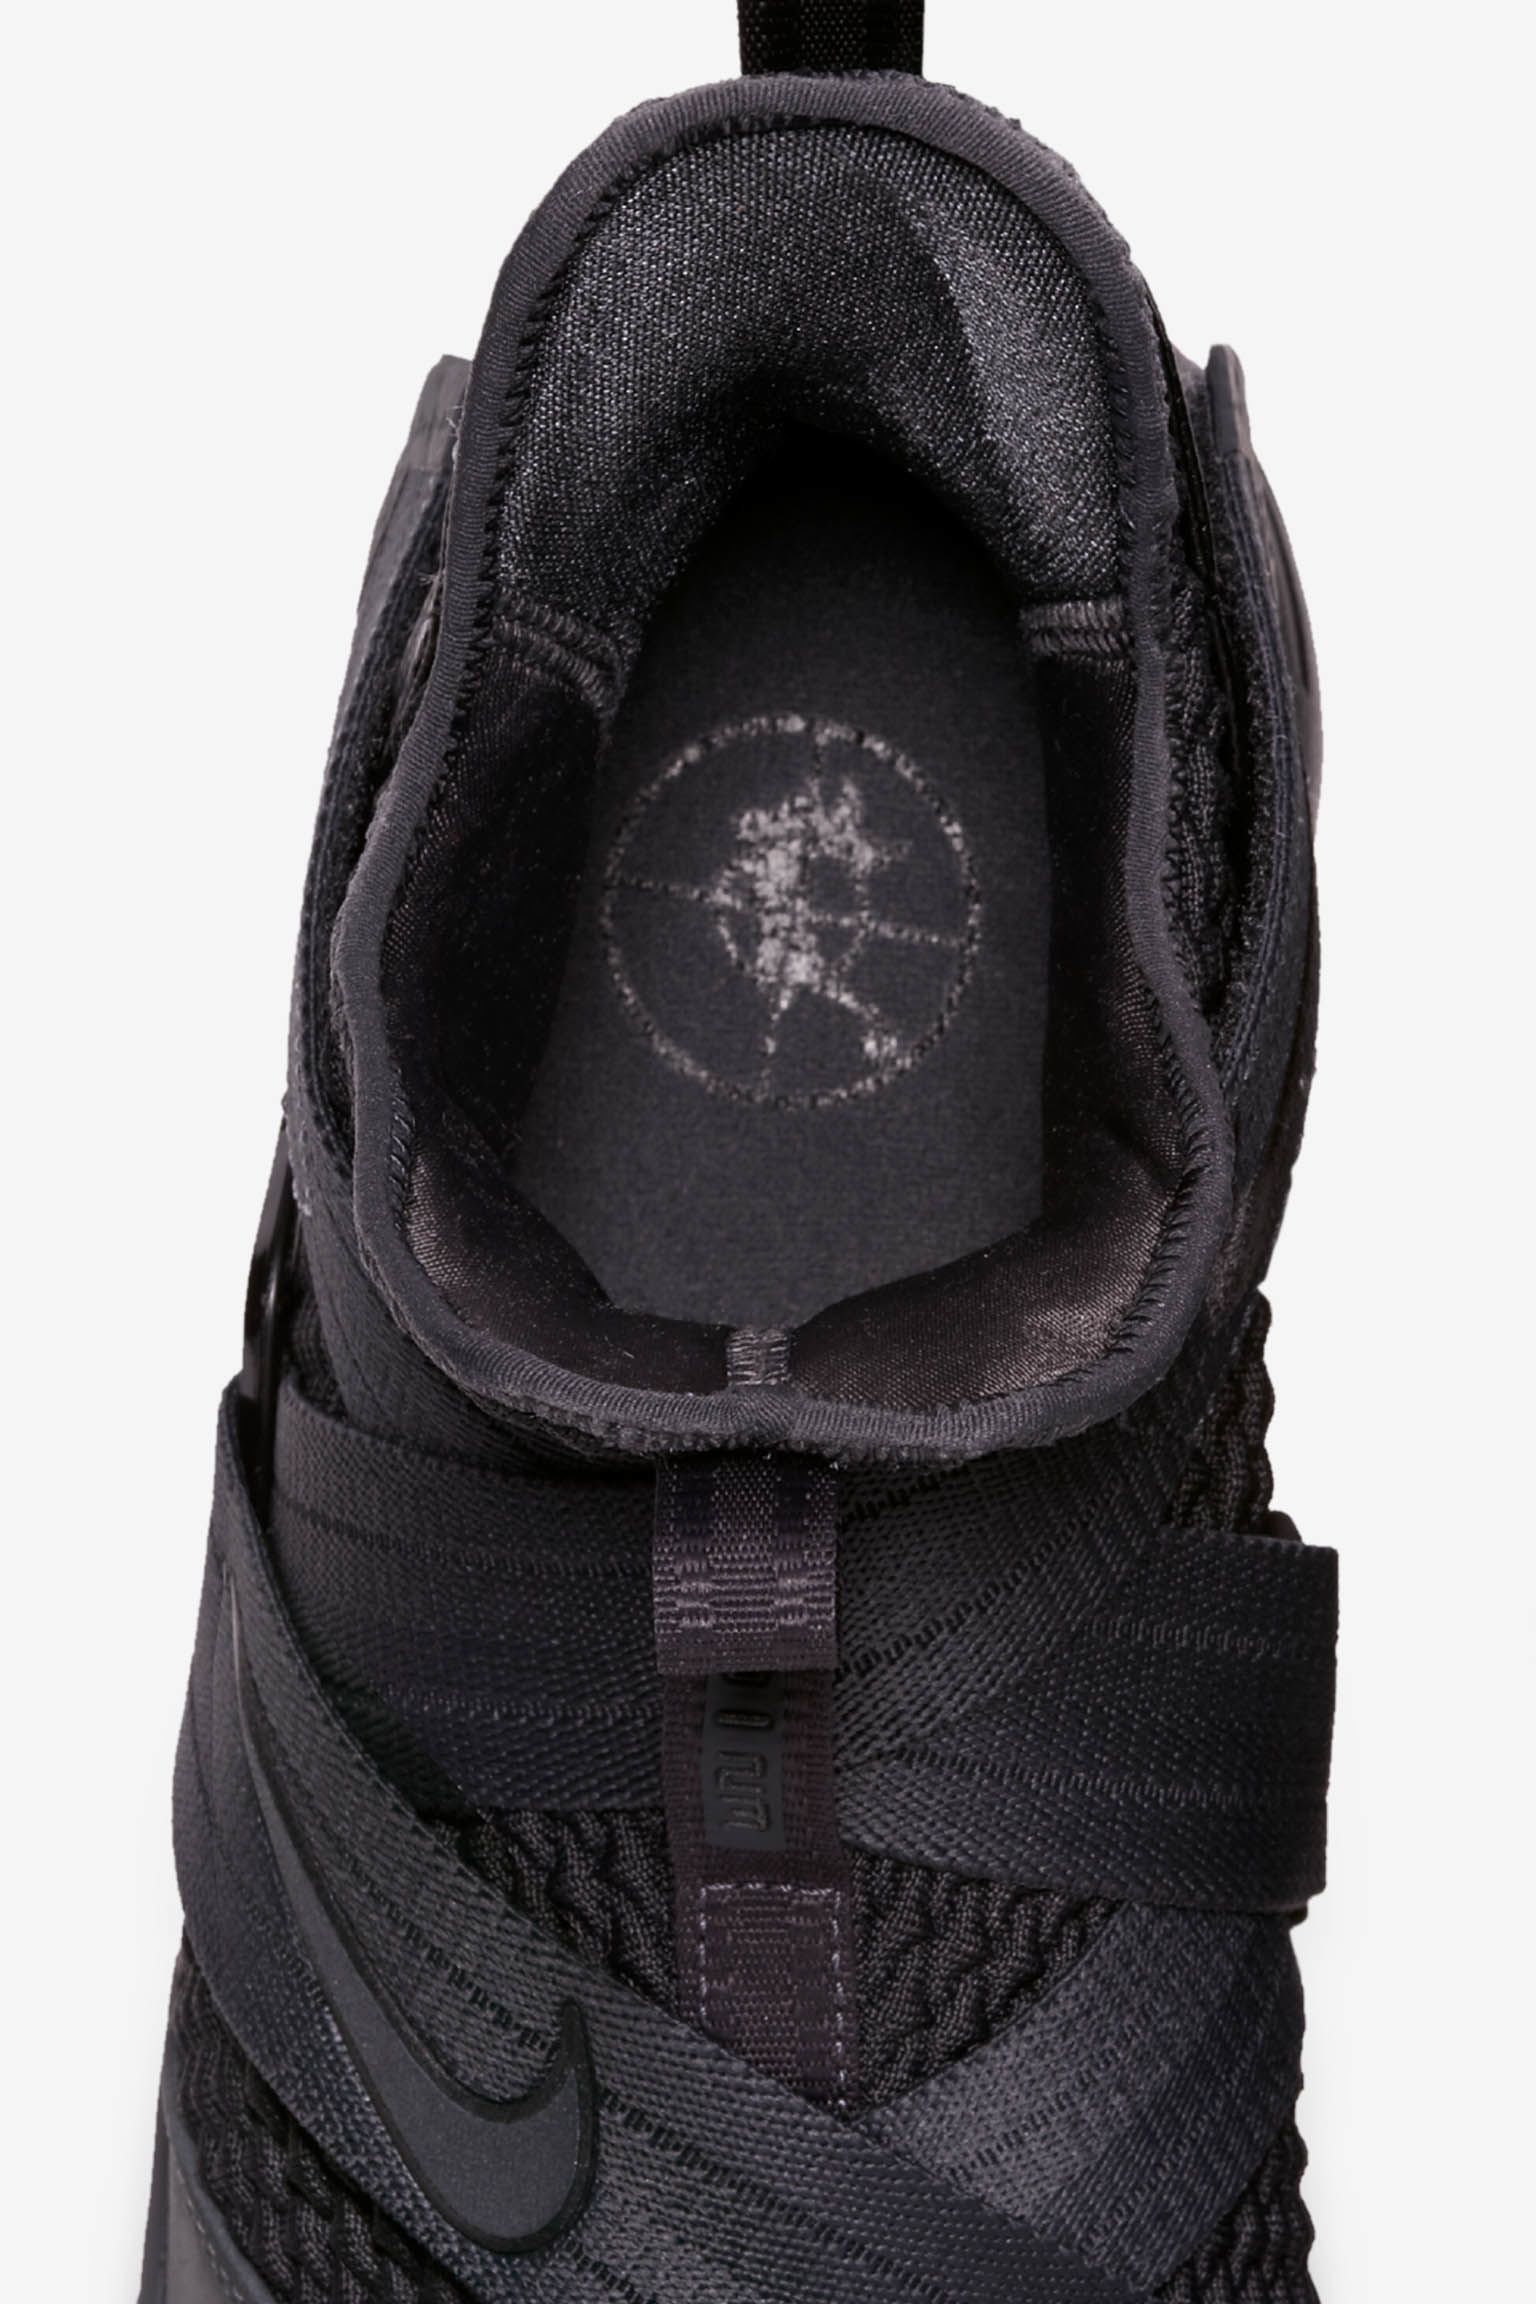 Nike LeBron Soldier 12 SFG 'Dark 23' Release Date. Nike SNKRS GB